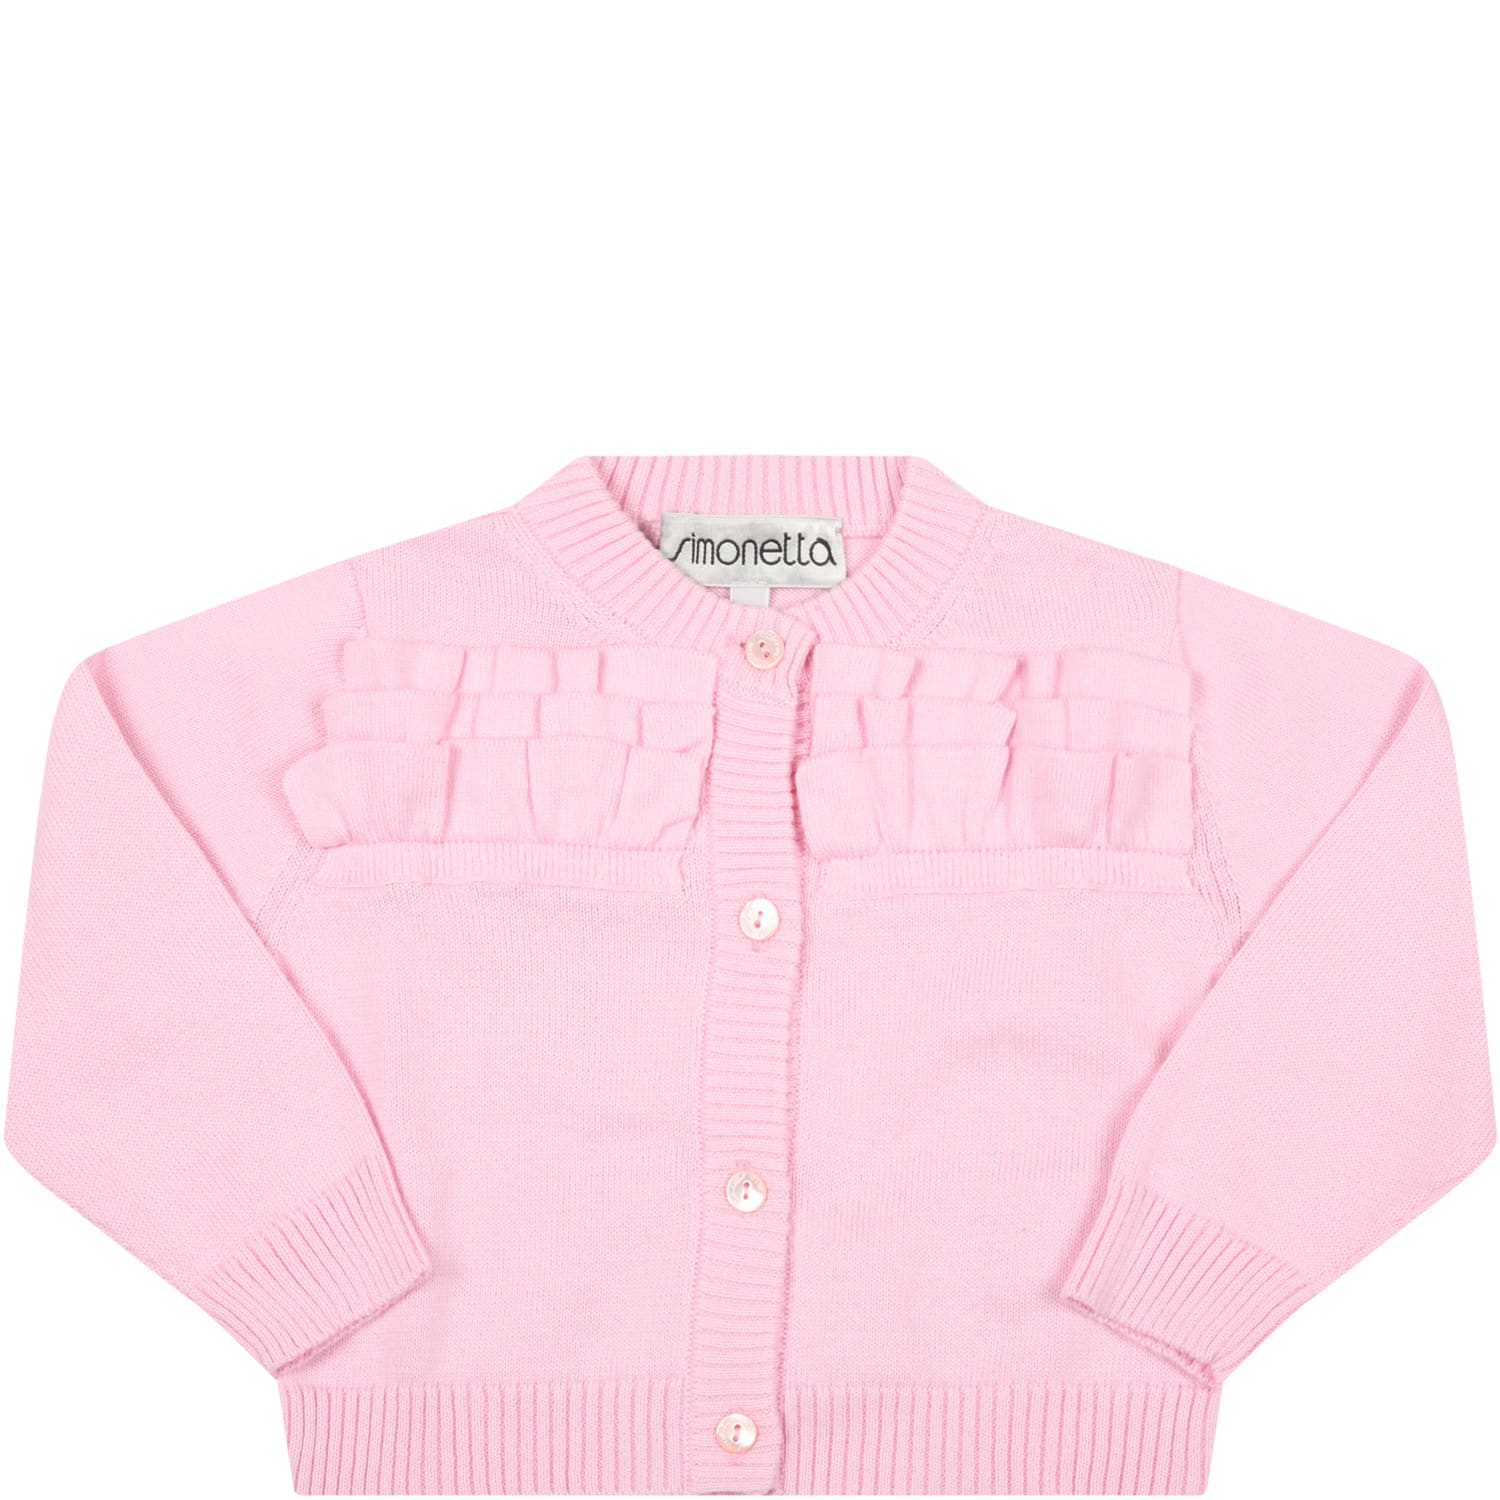 Simonetta Pink Cardigan For Baby Girl